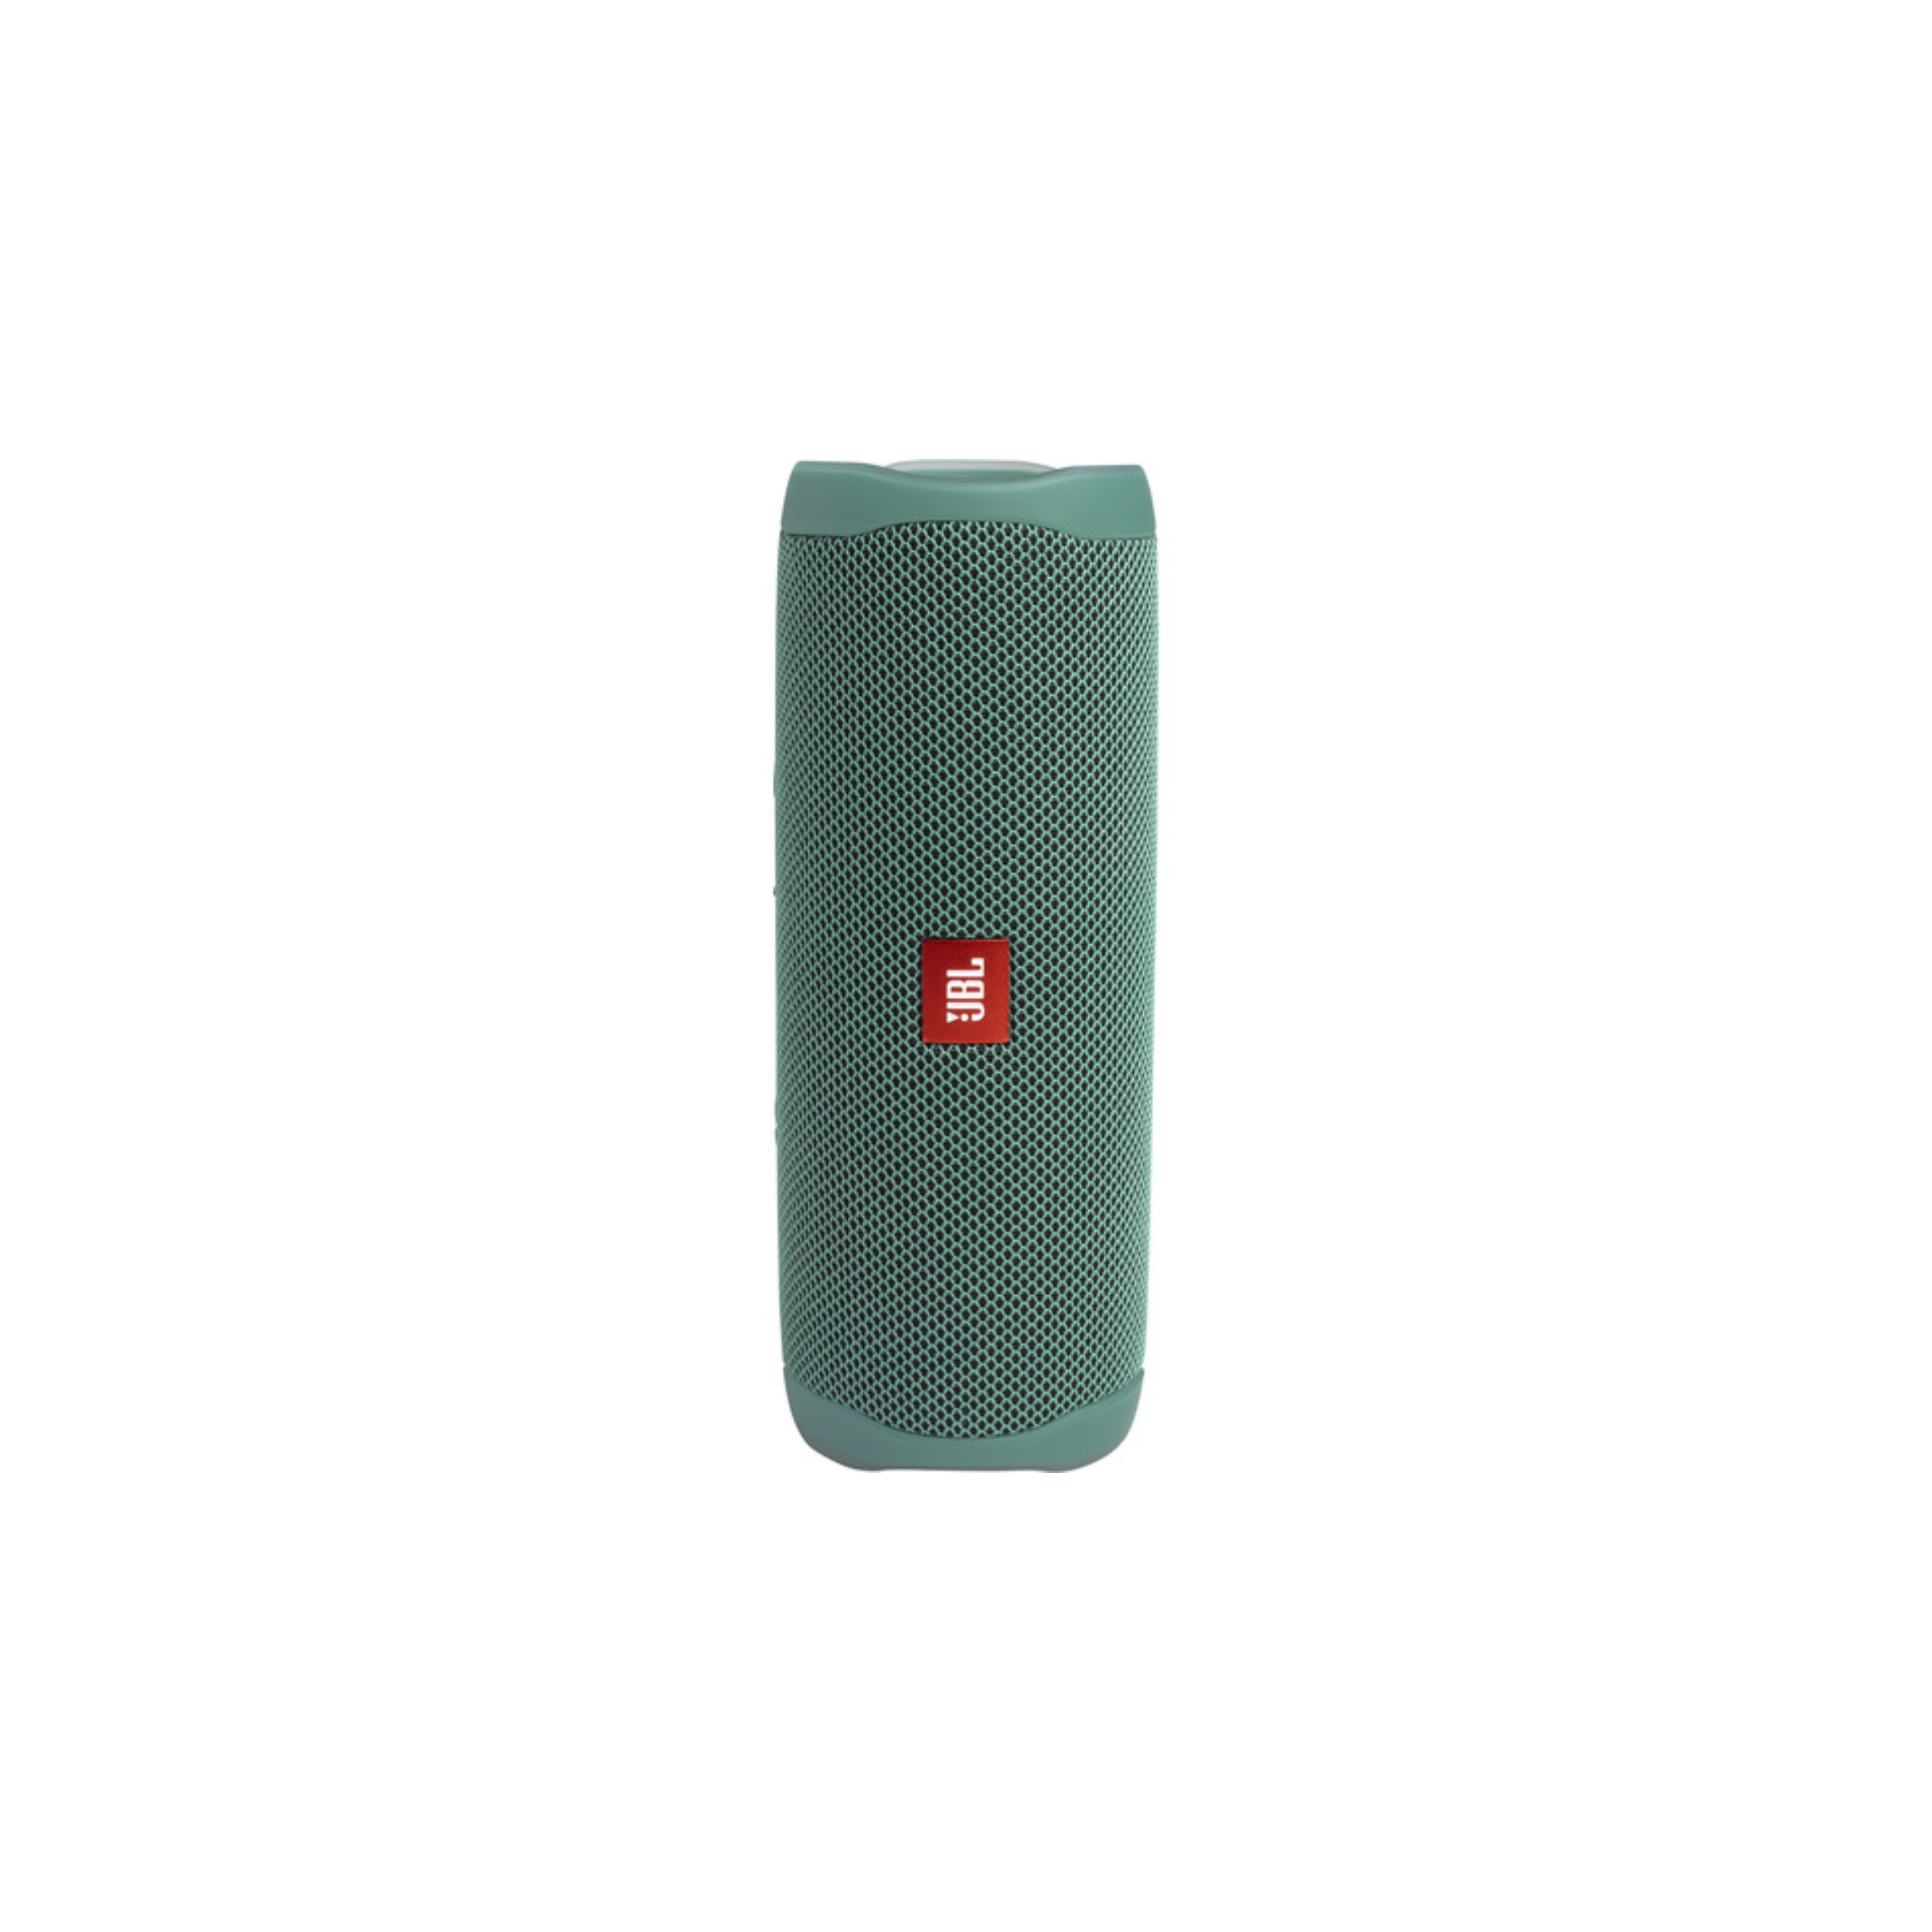 Jbl flip 5 waterproof portable Bluetooth speaker - Made From 90% Recycled Plastic